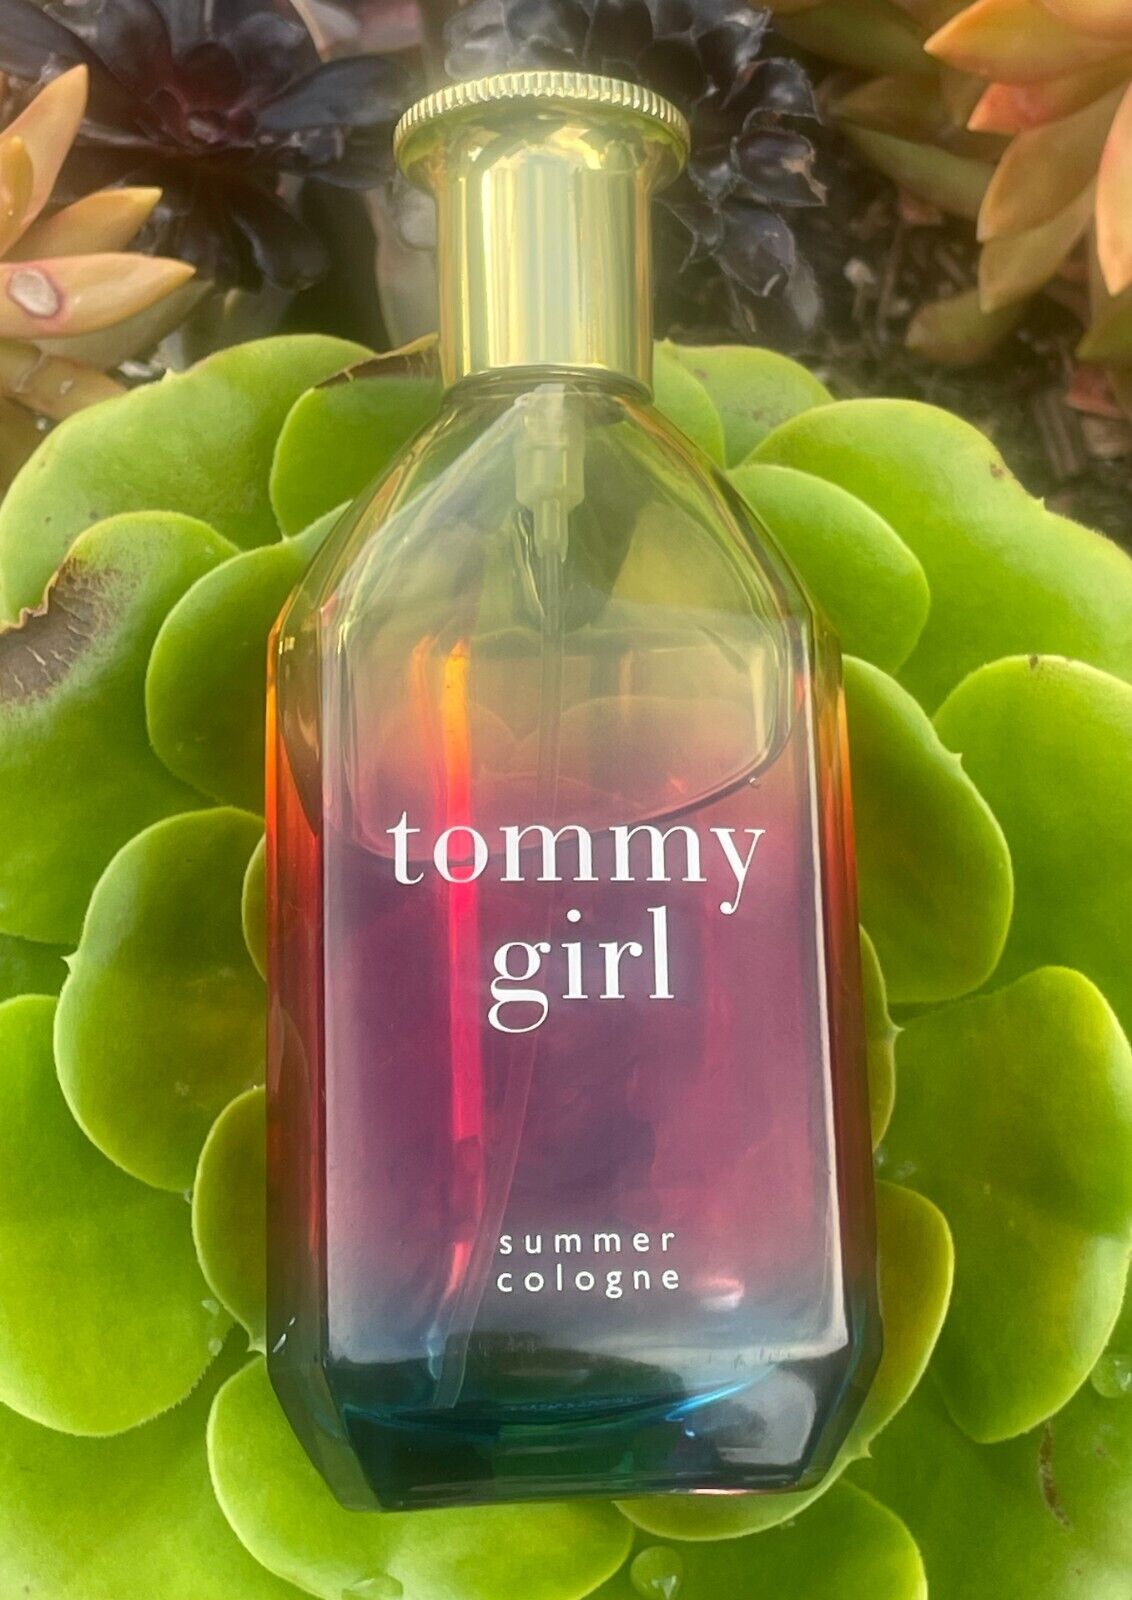 TOMMY GIRL SUMMER Cologne Spray by Tommy Hilfiger 3.4oz RARE VINTAGE